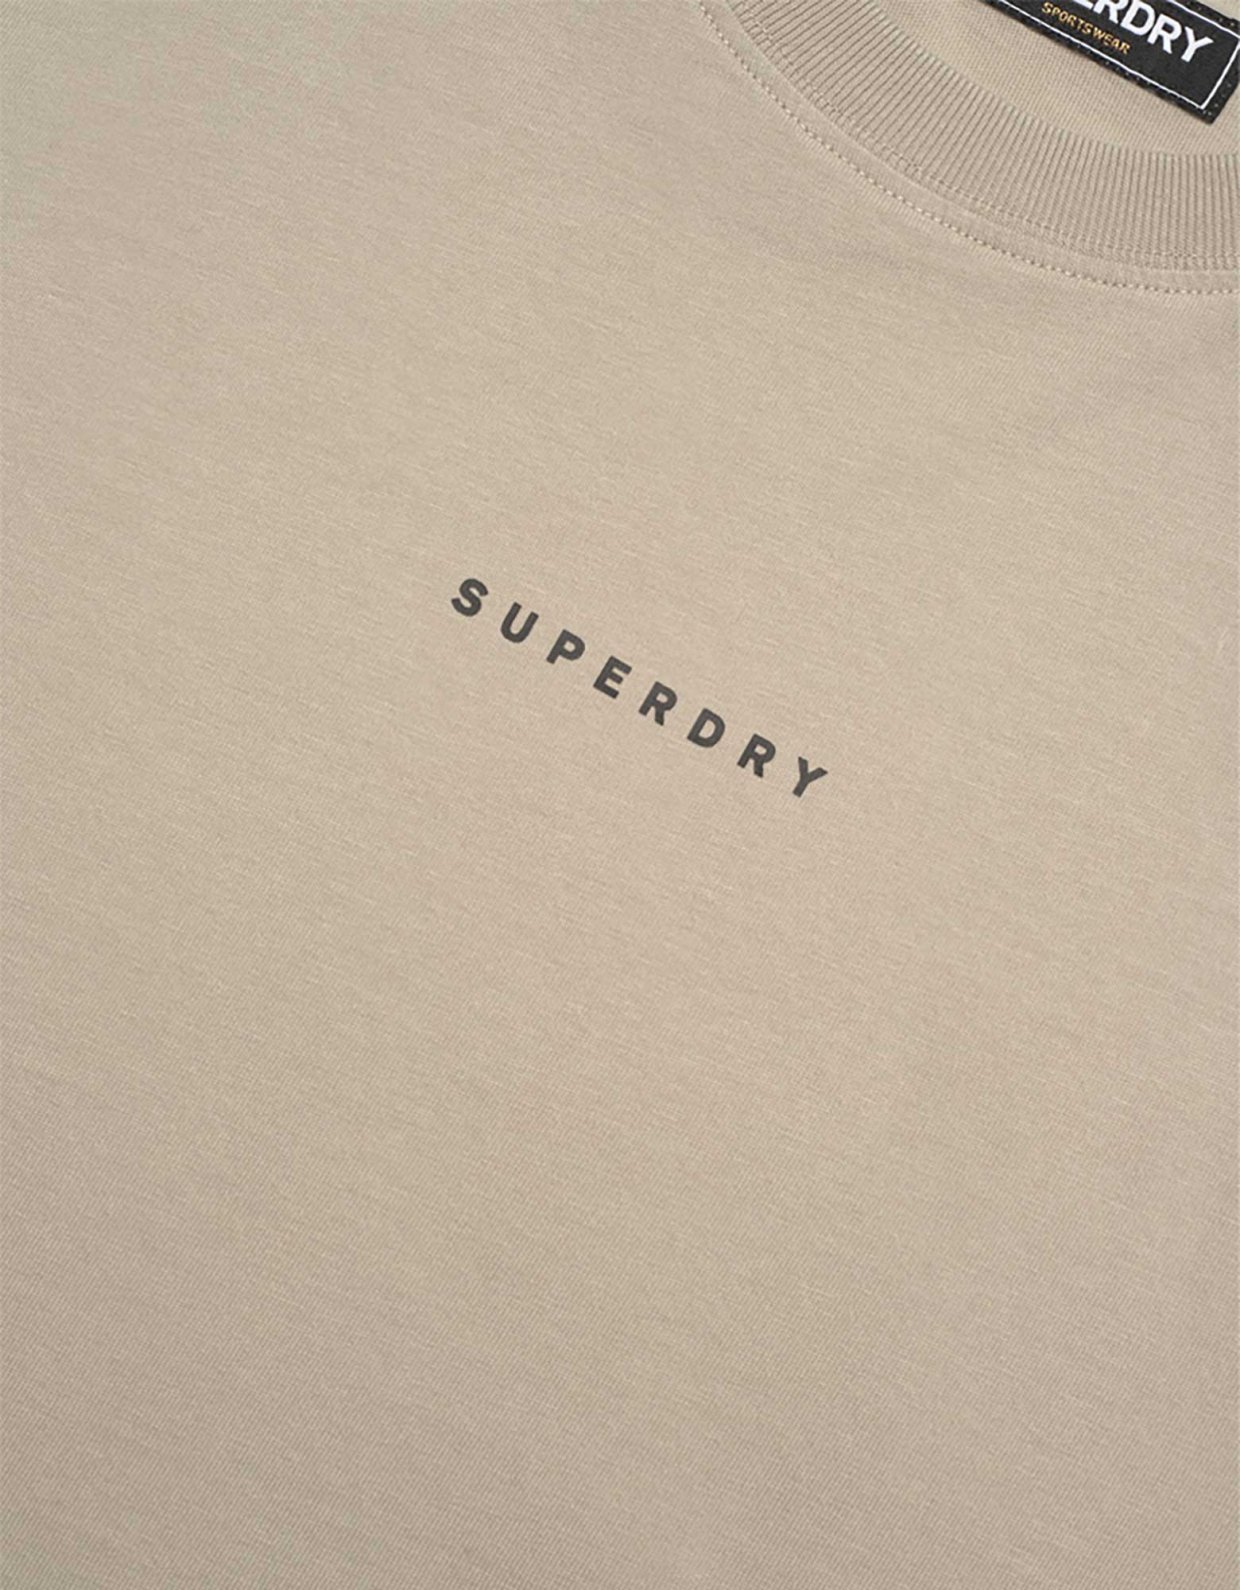 Superdry Code surplus logo tee willow grey